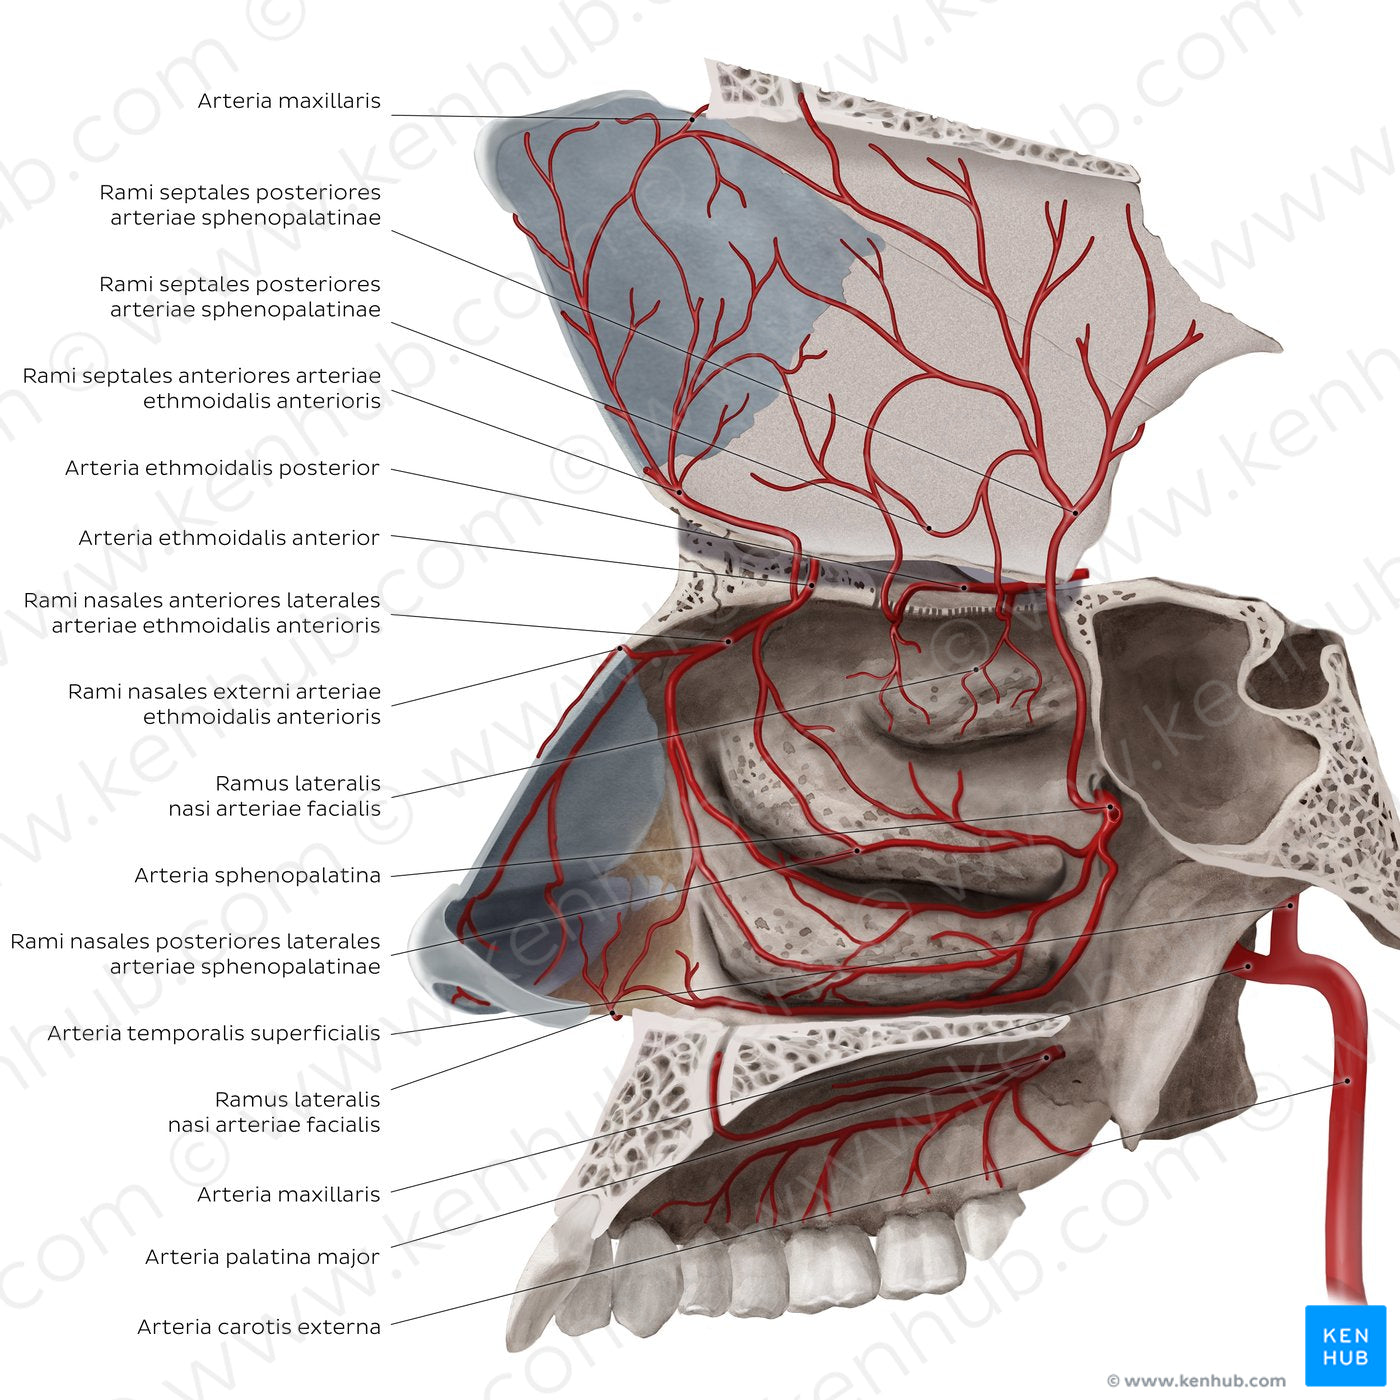 Arteries of the nasal cavity (Latin)